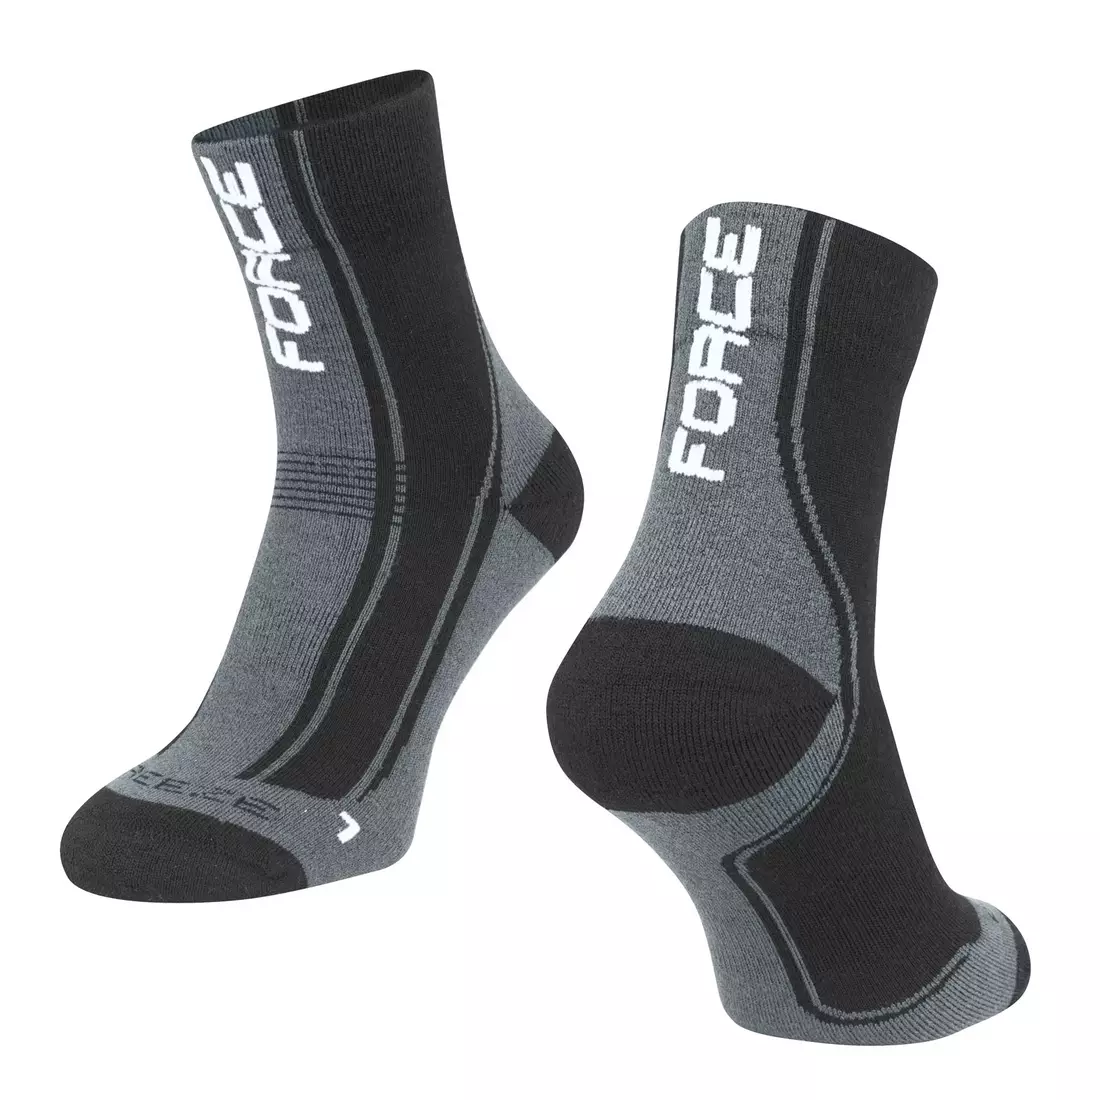 FORCE FREEZE winter cycling socks, black-gray-white